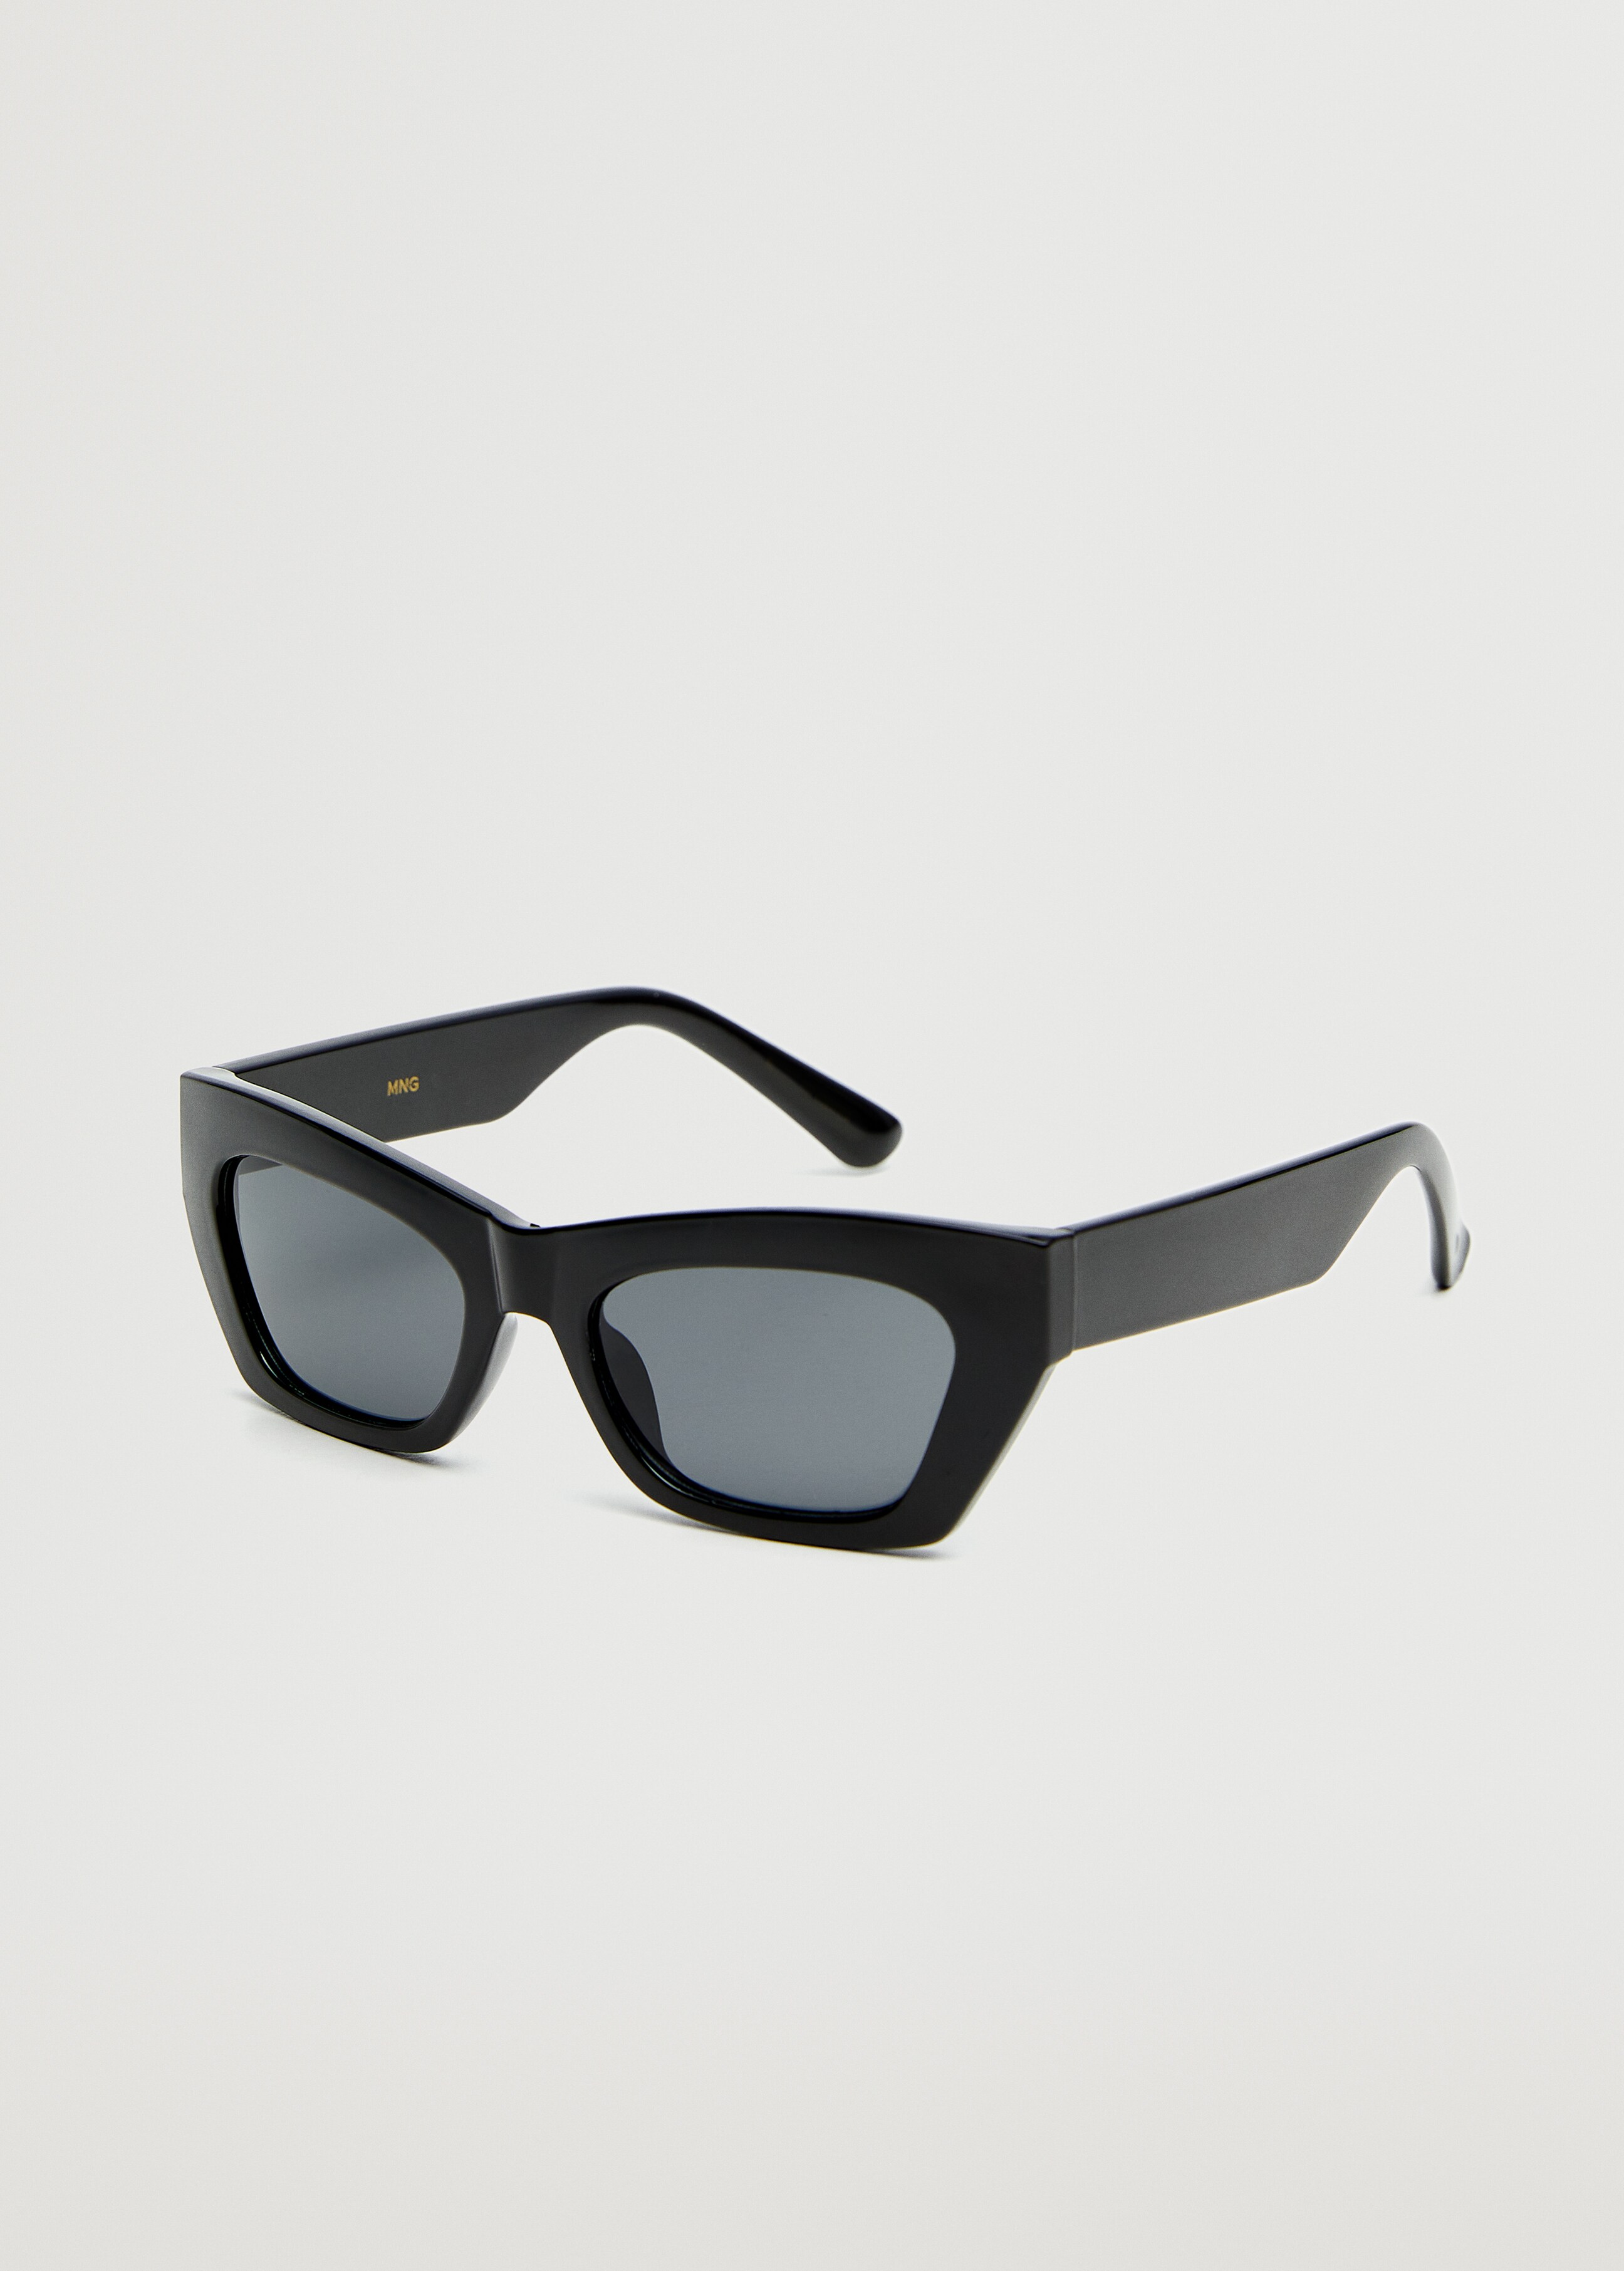 Acetate frame sunglasses - General plane